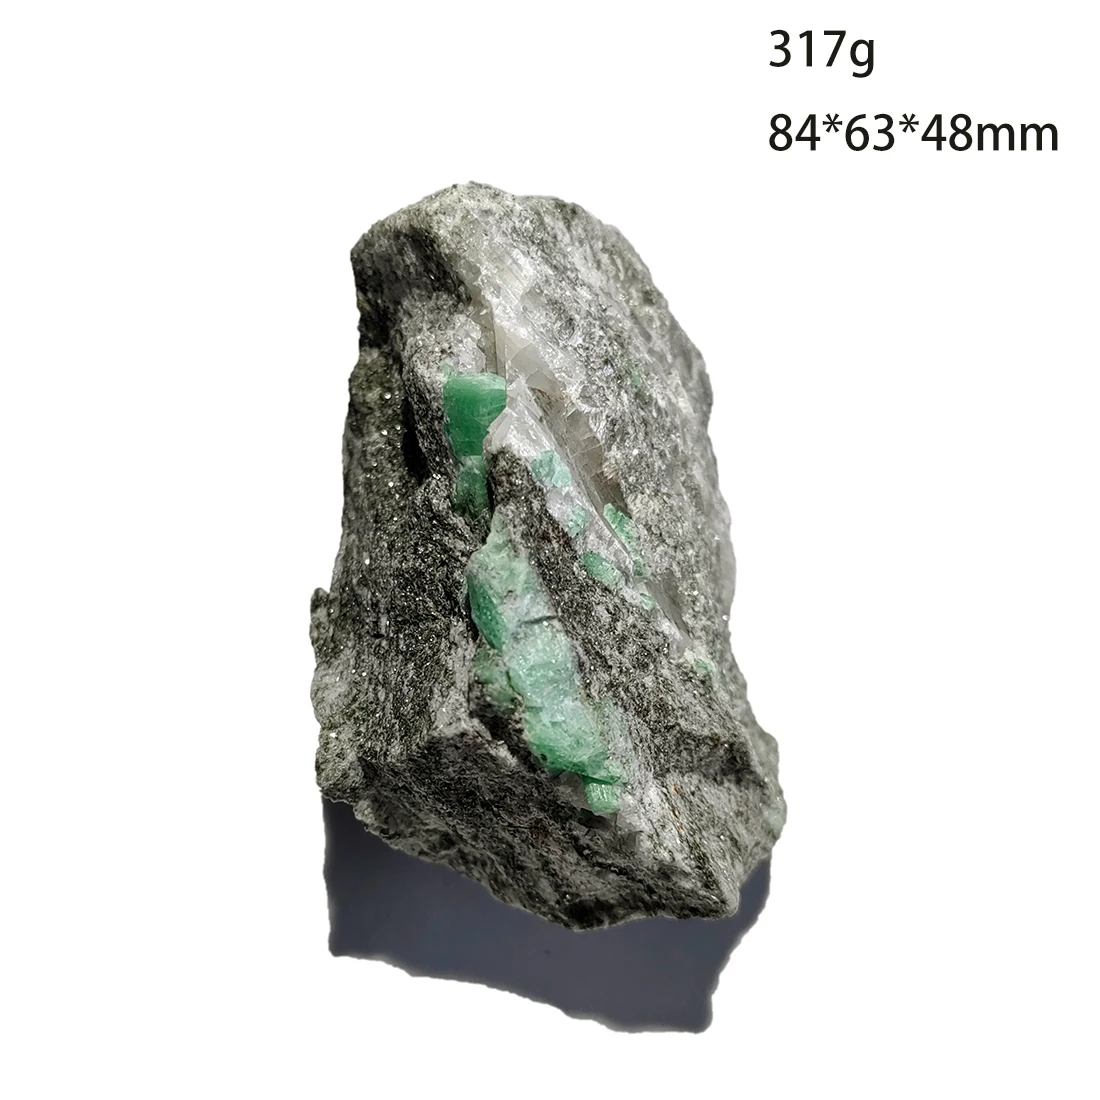 

C3-8B TOP 100% Natural Quartz Emerald Mineral Crystal Specimen Home Decoration From Malipo Wenshan Yunnan Province China